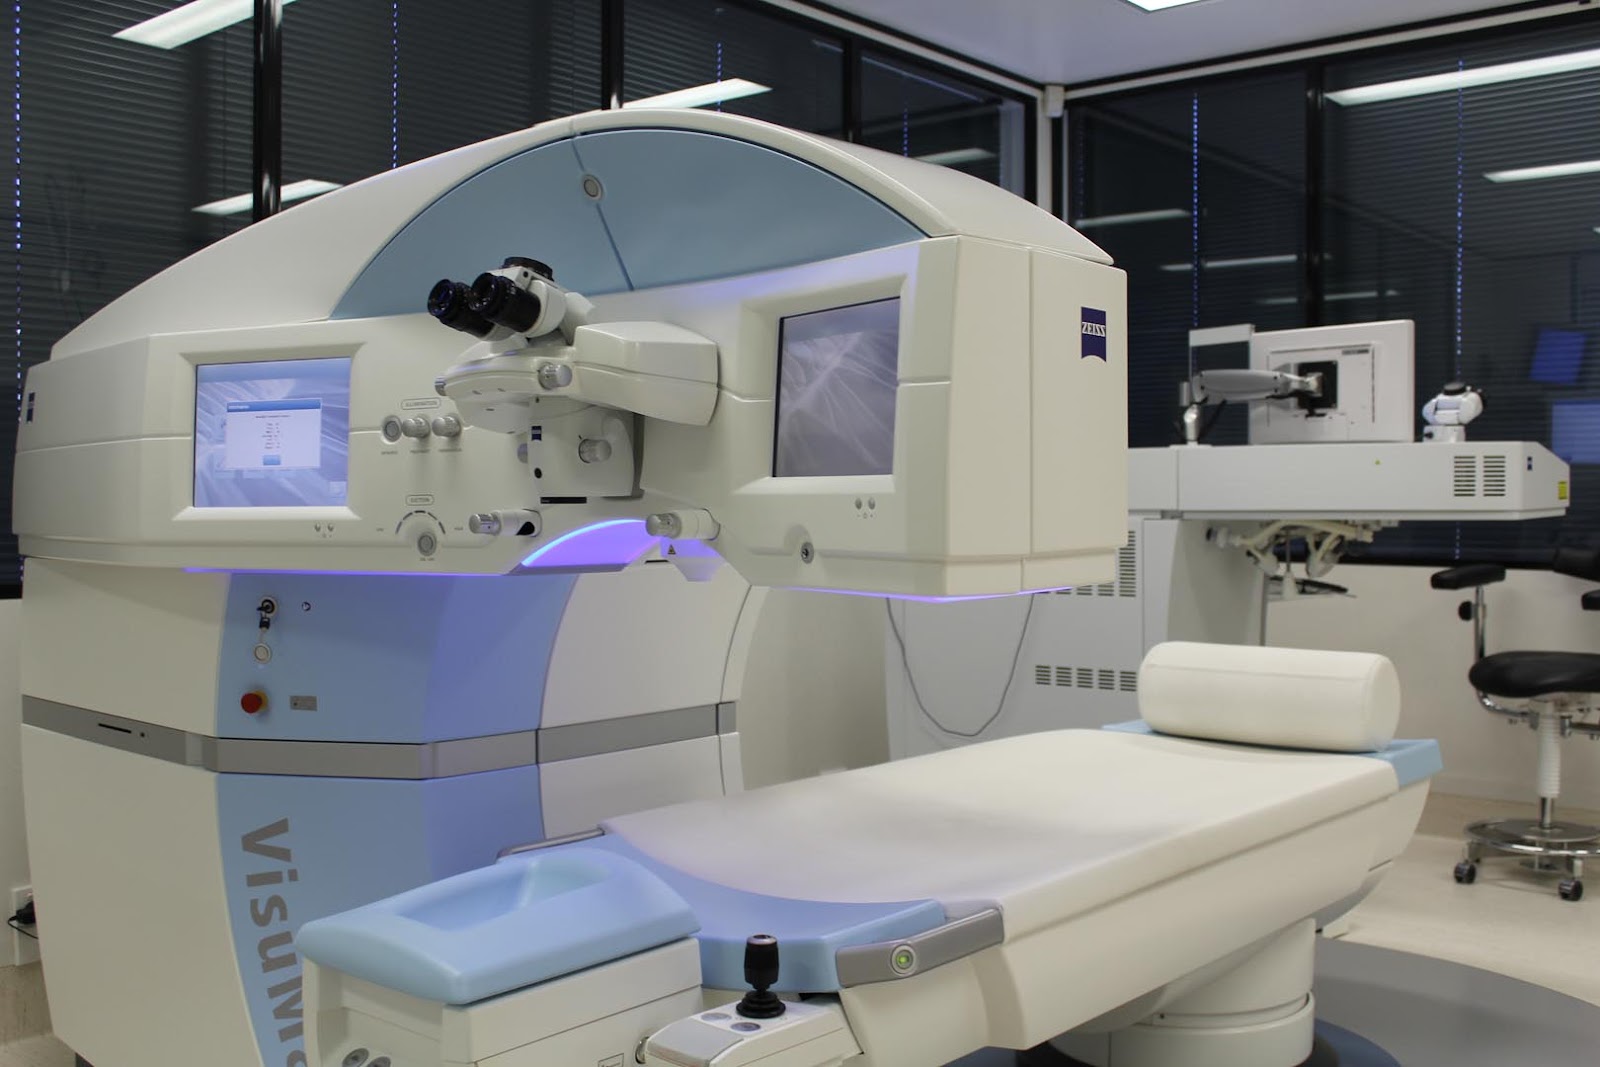 Wellington Eye Centre laser eye surgery operating theatre - VisuMax femtosecond laser